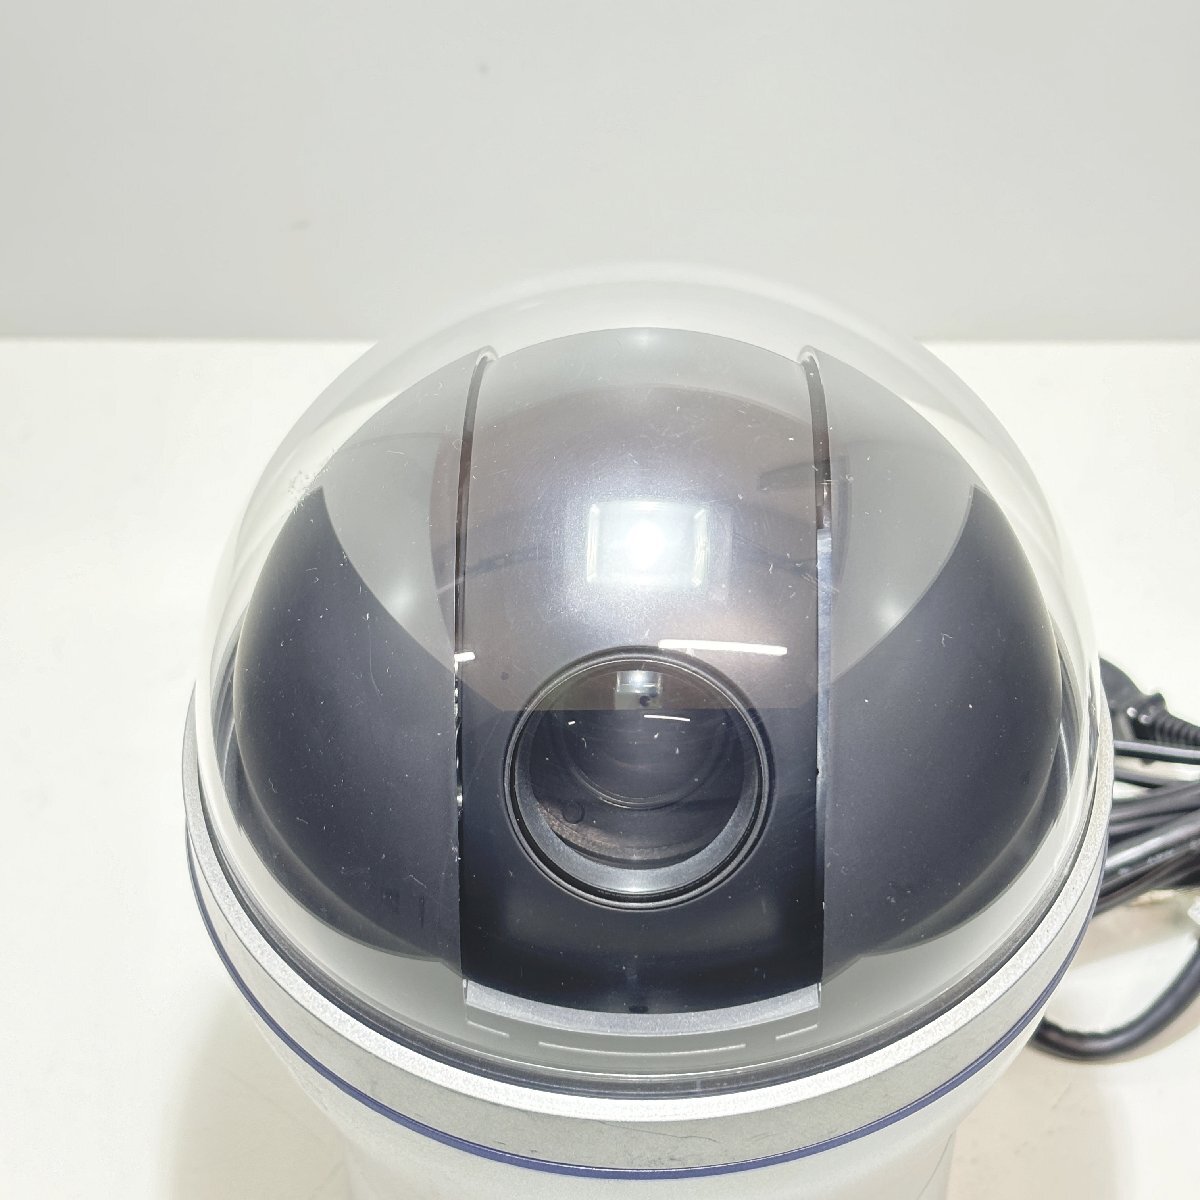 Panasonic ドーム型 コンビネーション カラーカメラ WV-CS950 パナソニック 防犯カメラ 0406215_画像6